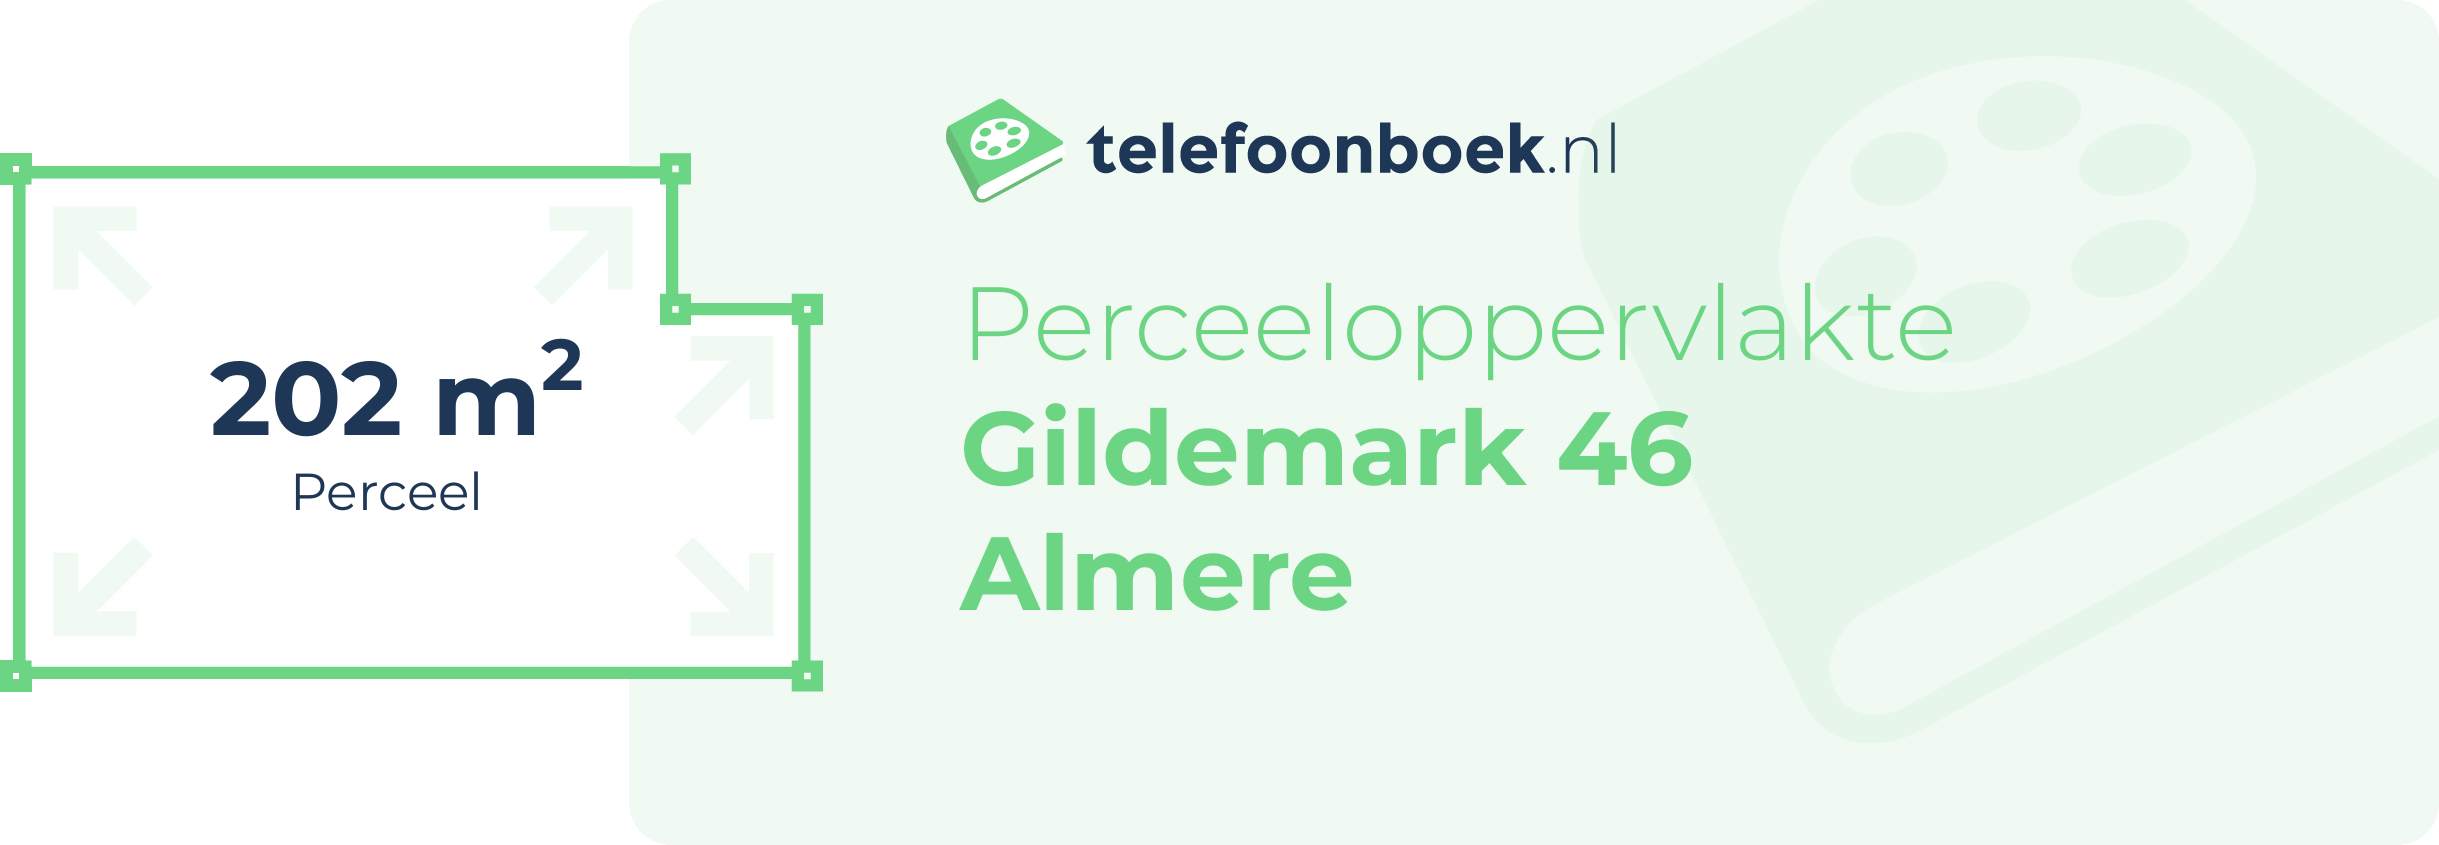 Perceeloppervlakte Gildemark 46 Almere